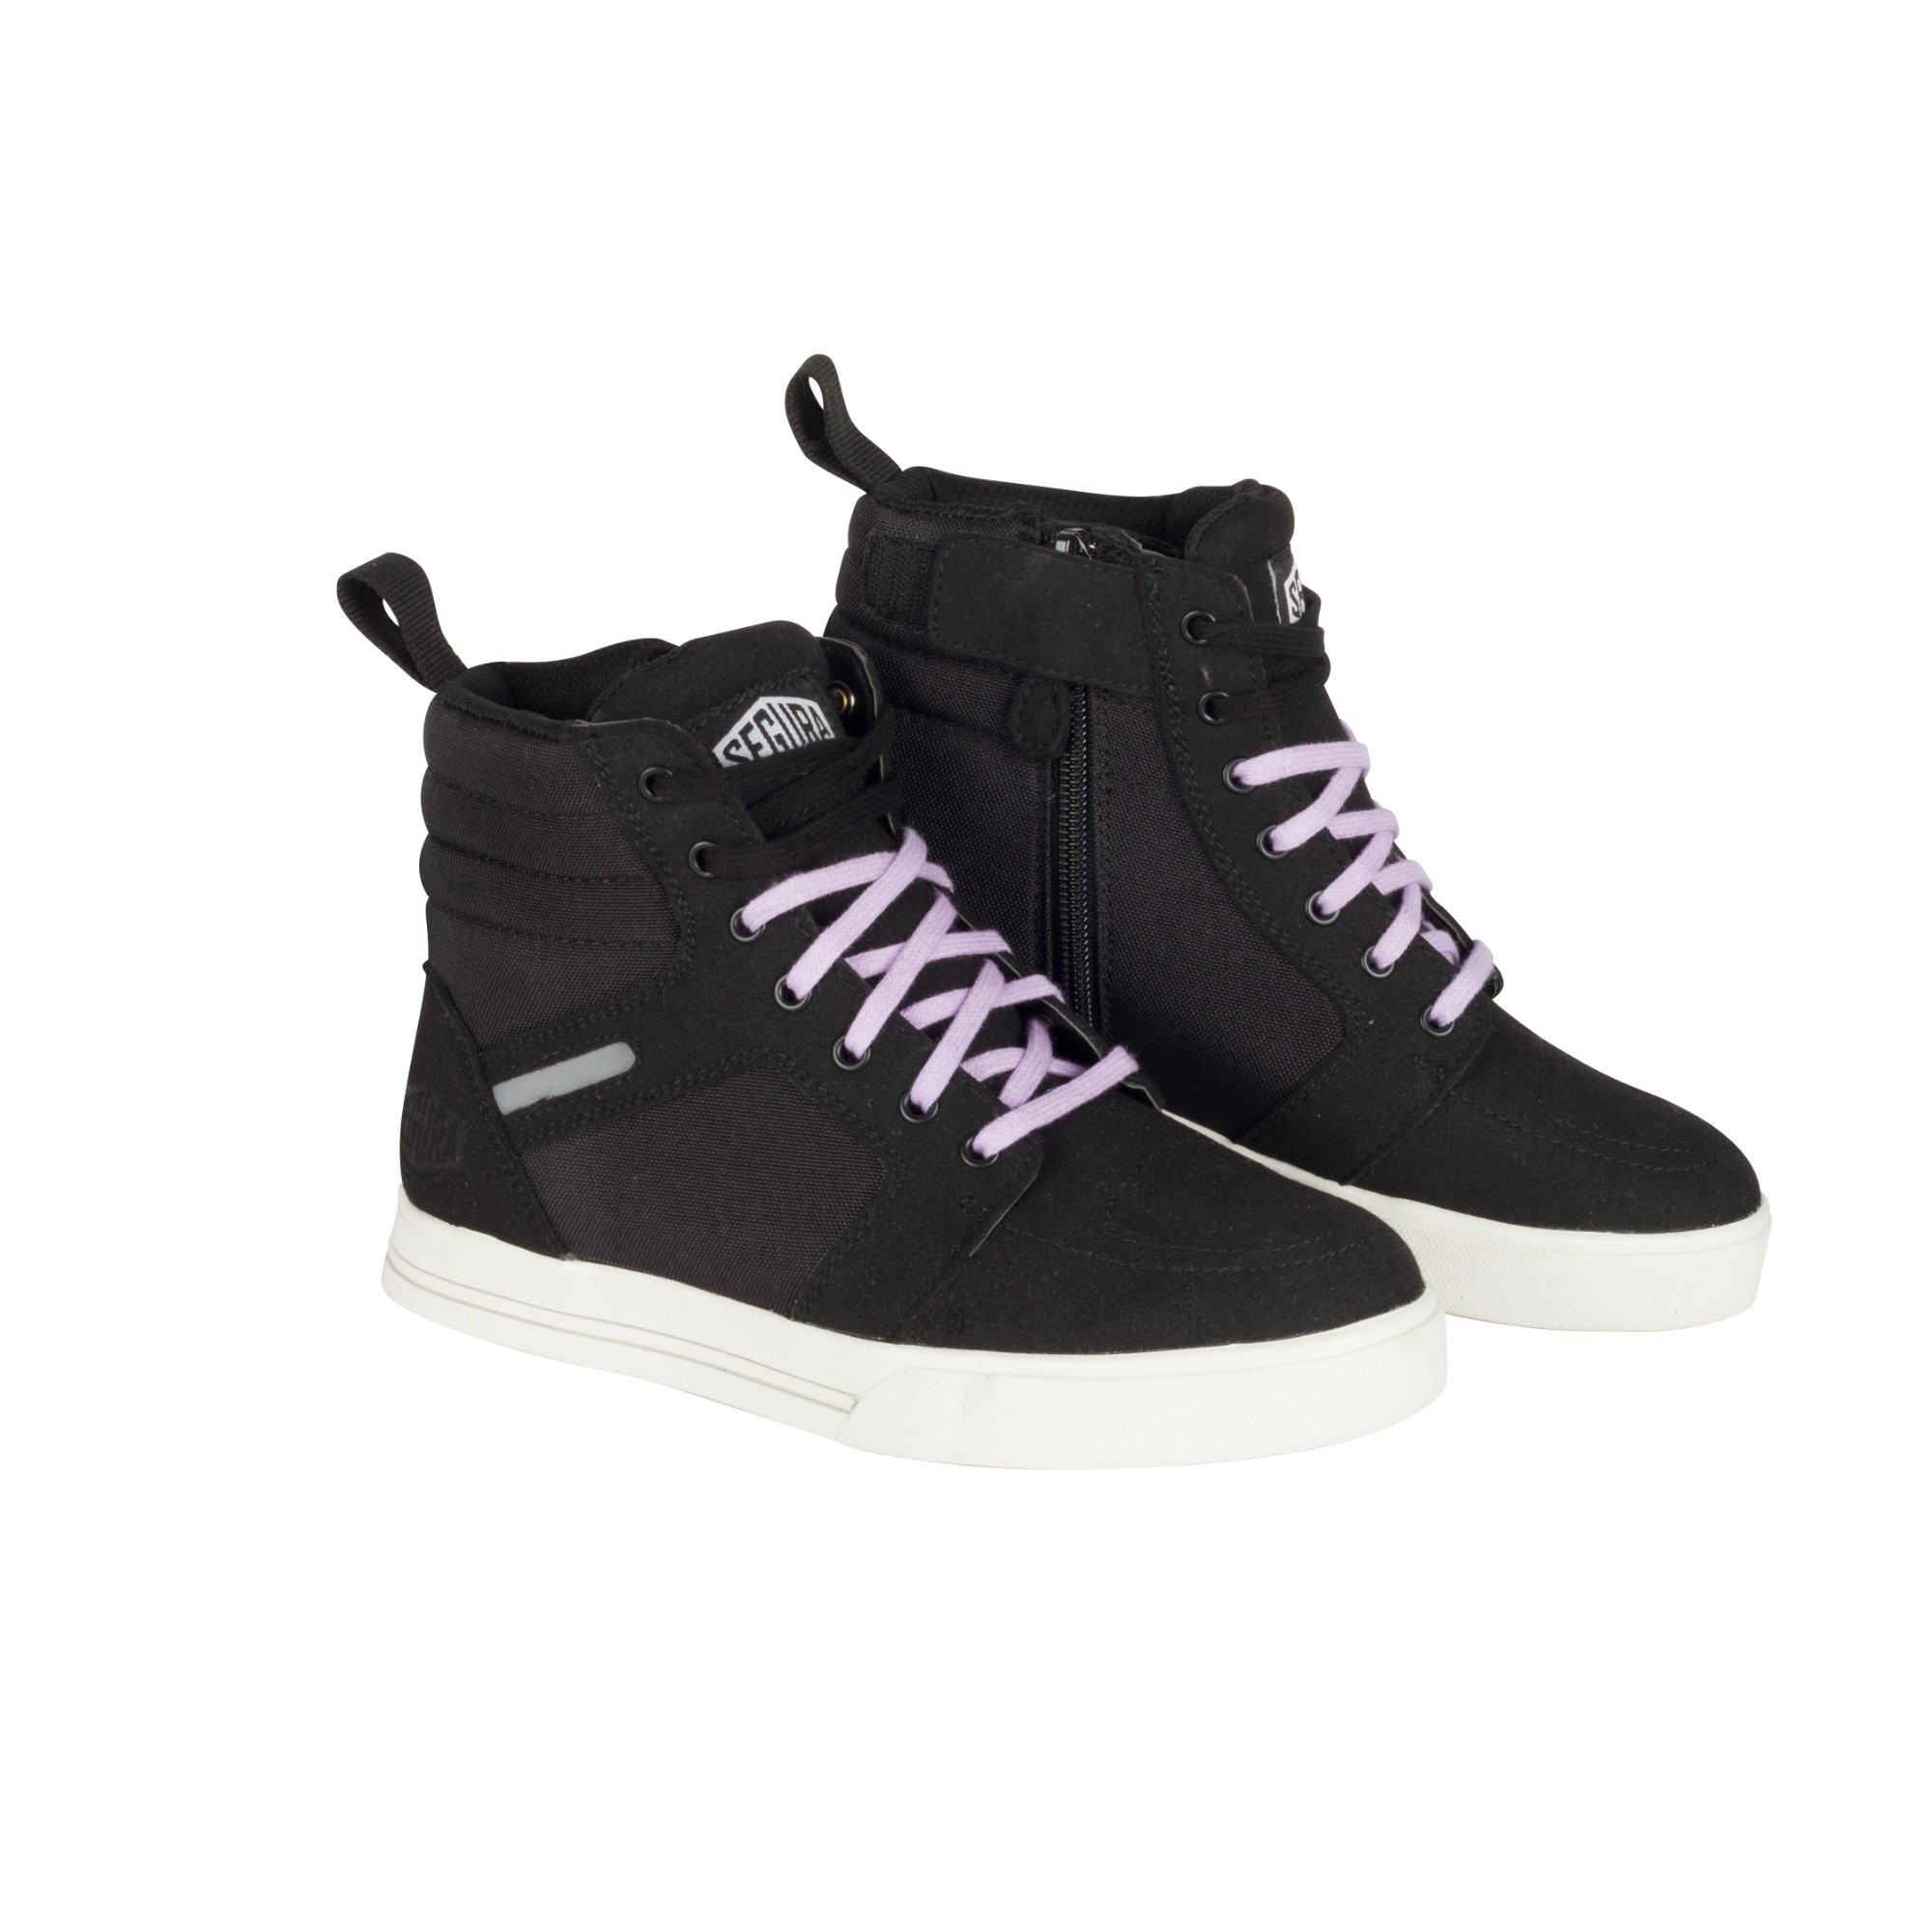 Image of Segura Lady Santana Sneakers Black Lilac Size 39 ID 3660815184172